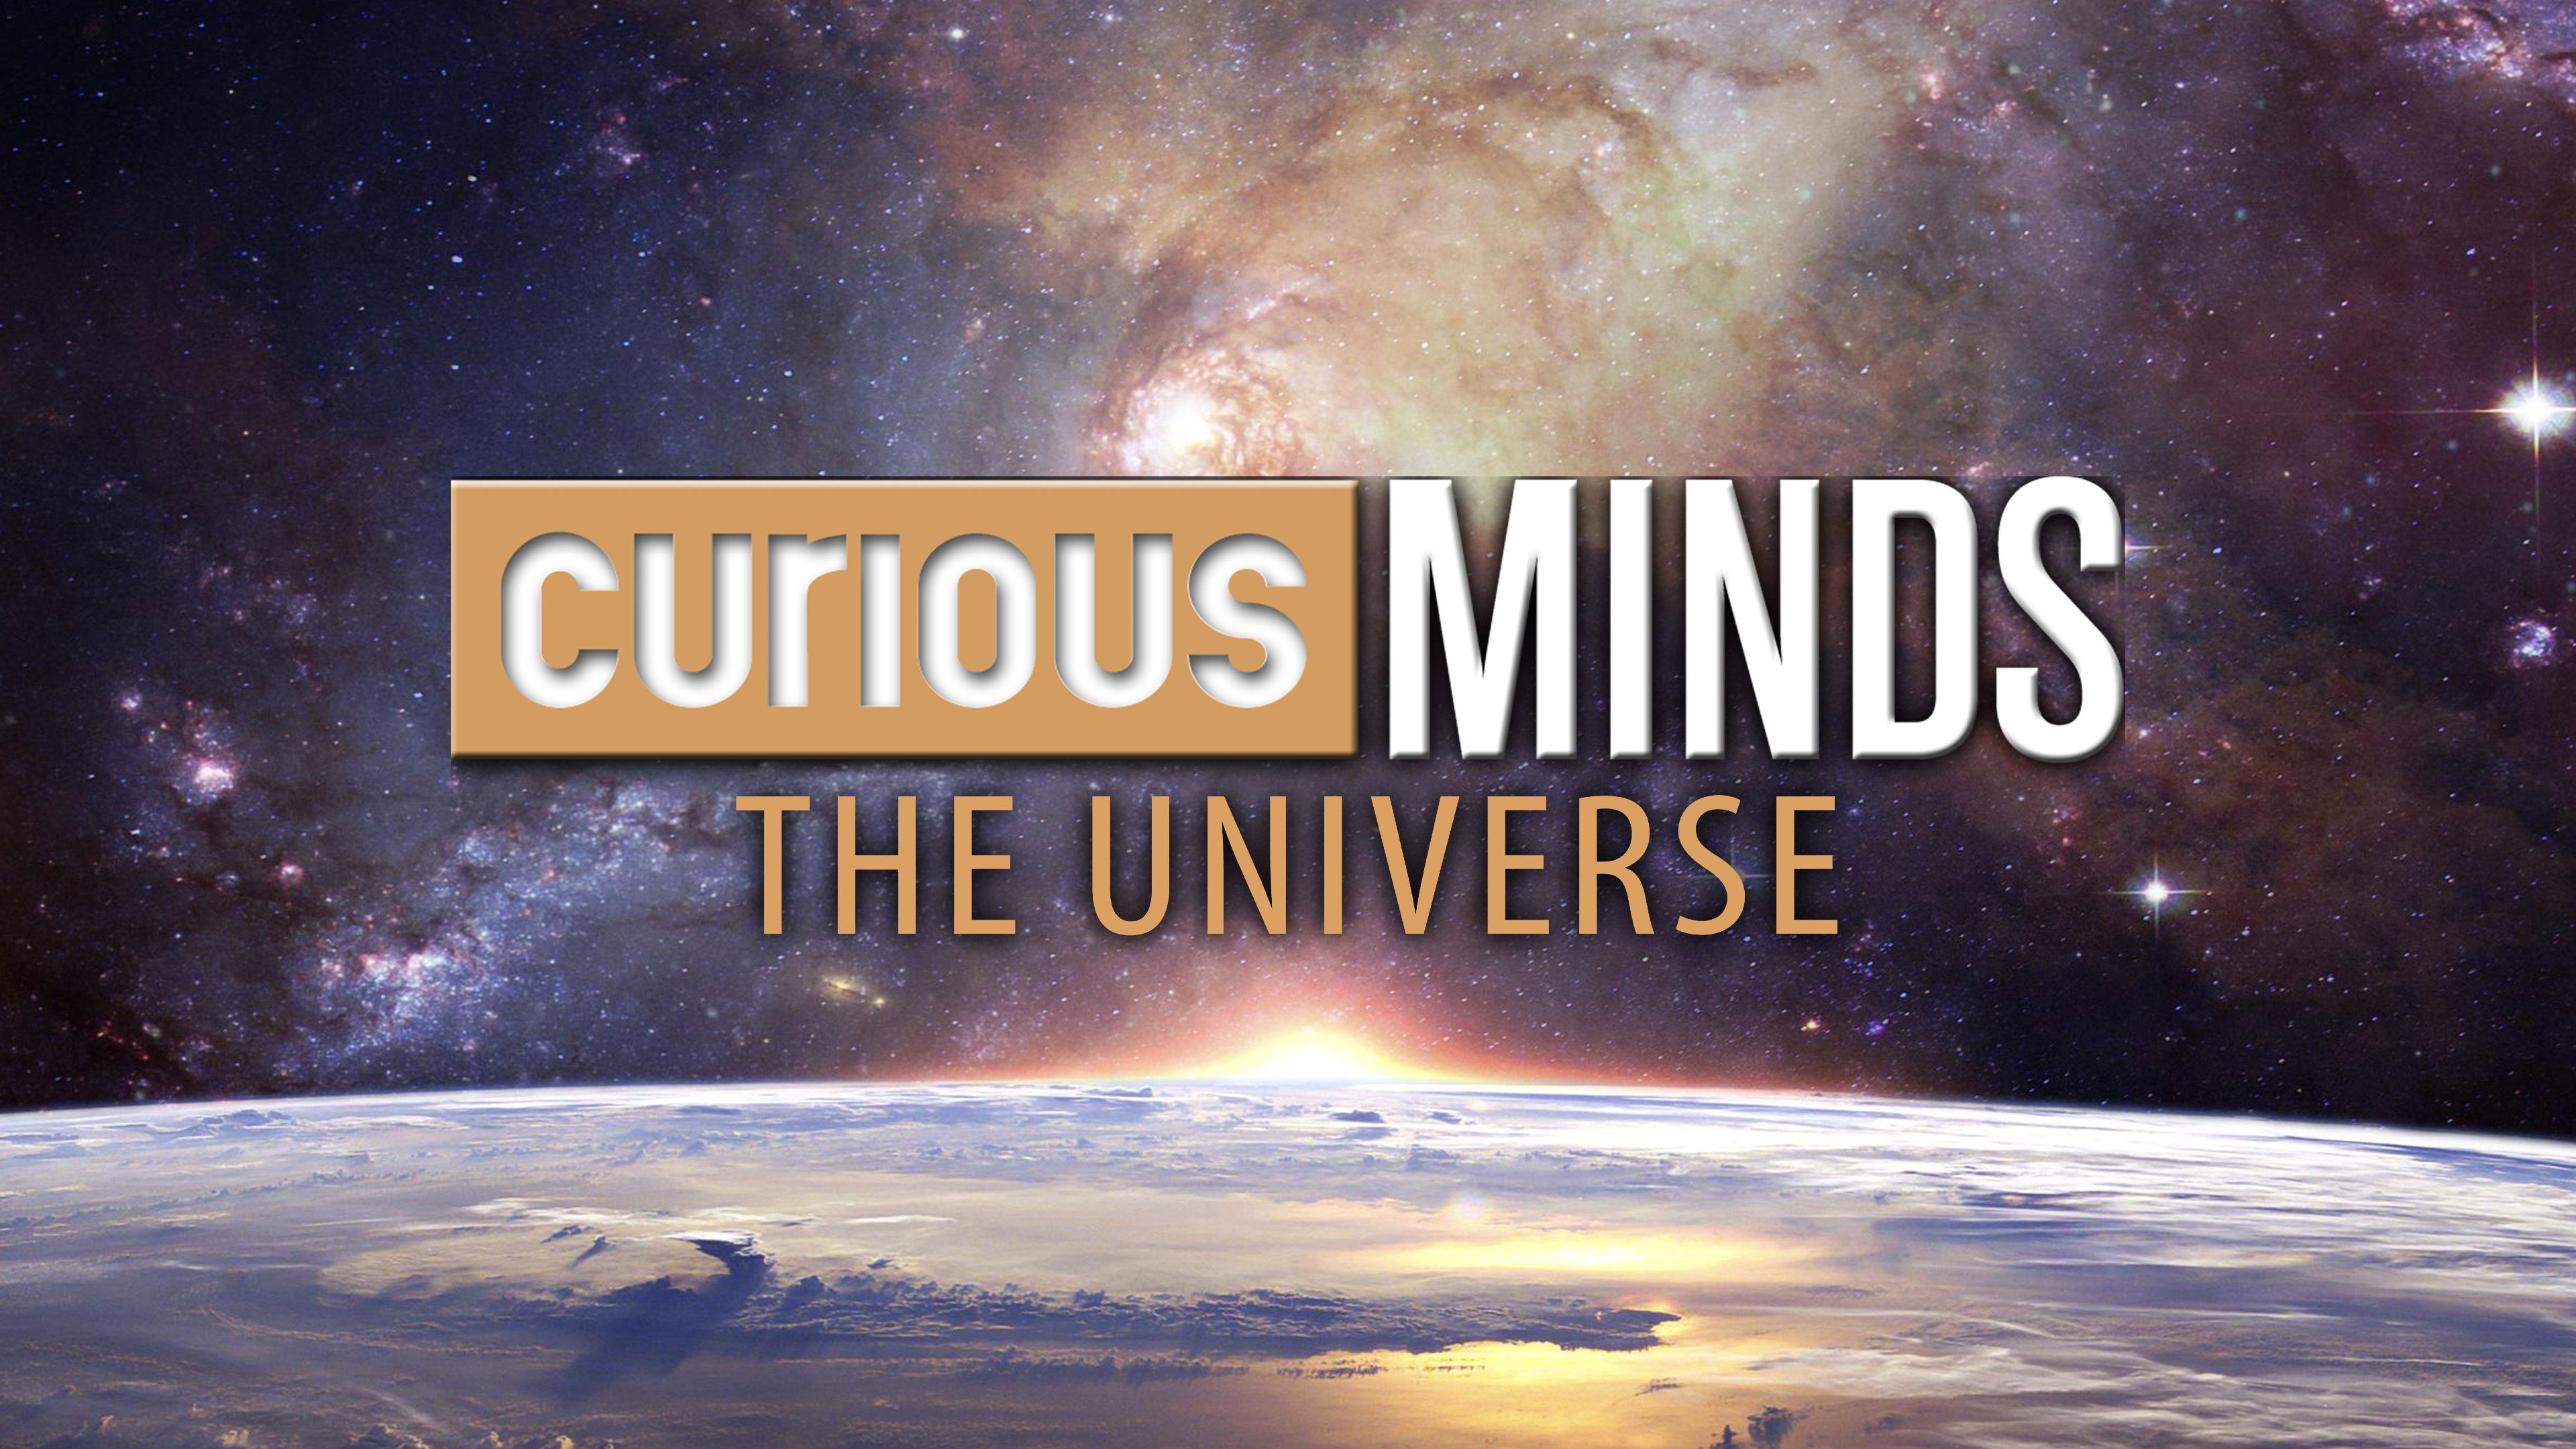 Curious Minds: The Universe